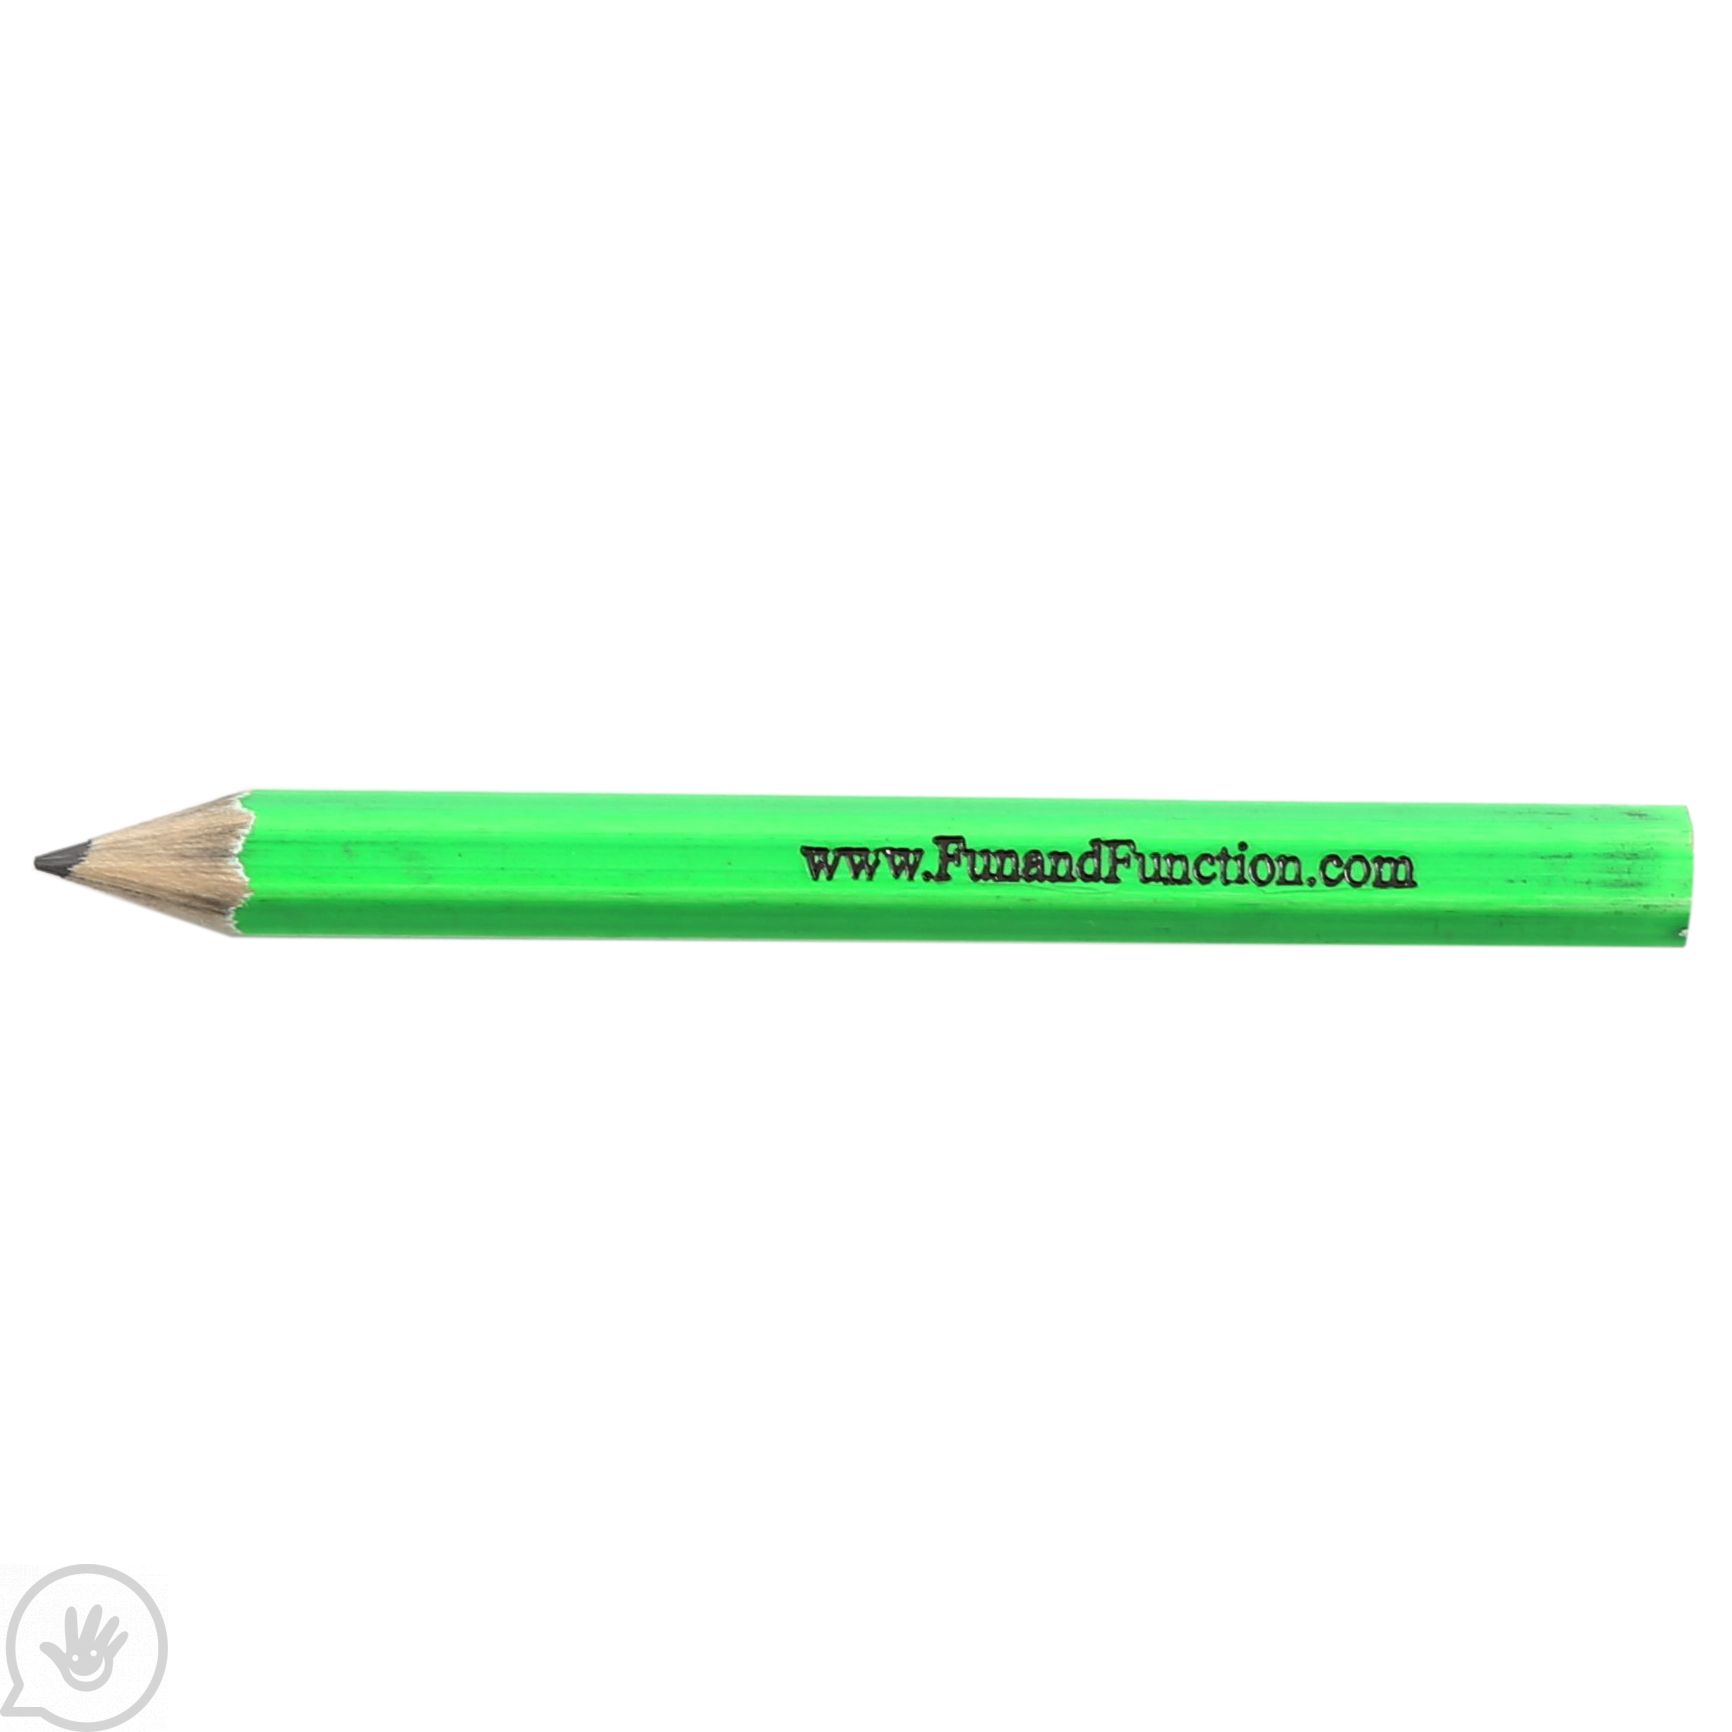 Little Pencils for Kids | Short Pencil Pack | 4 Inch Pencils for Proper Grip